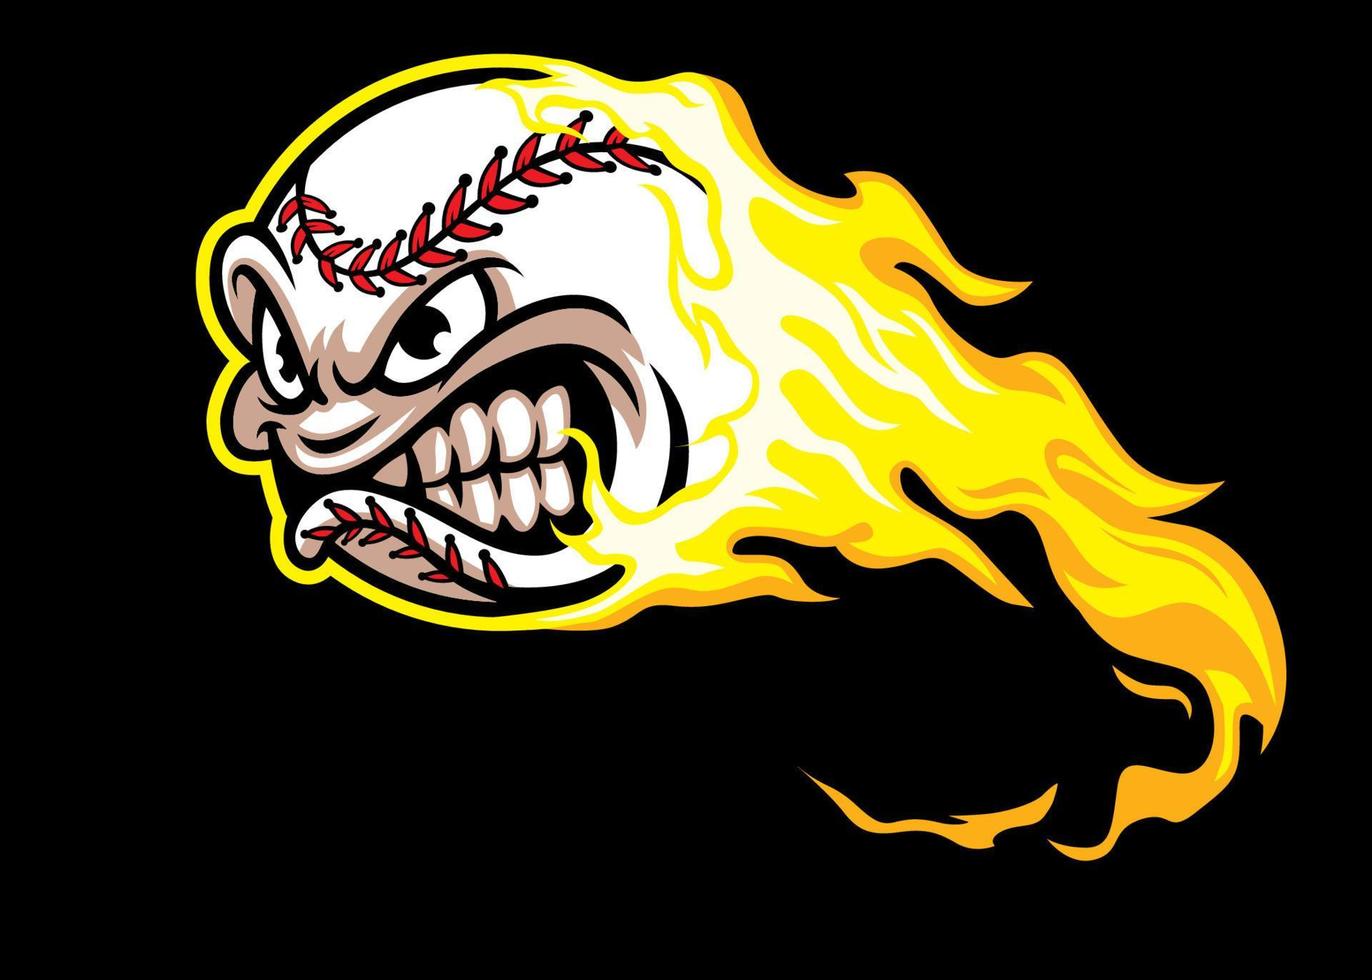 béisbol pelota personaje mascota ardiente fuego vector